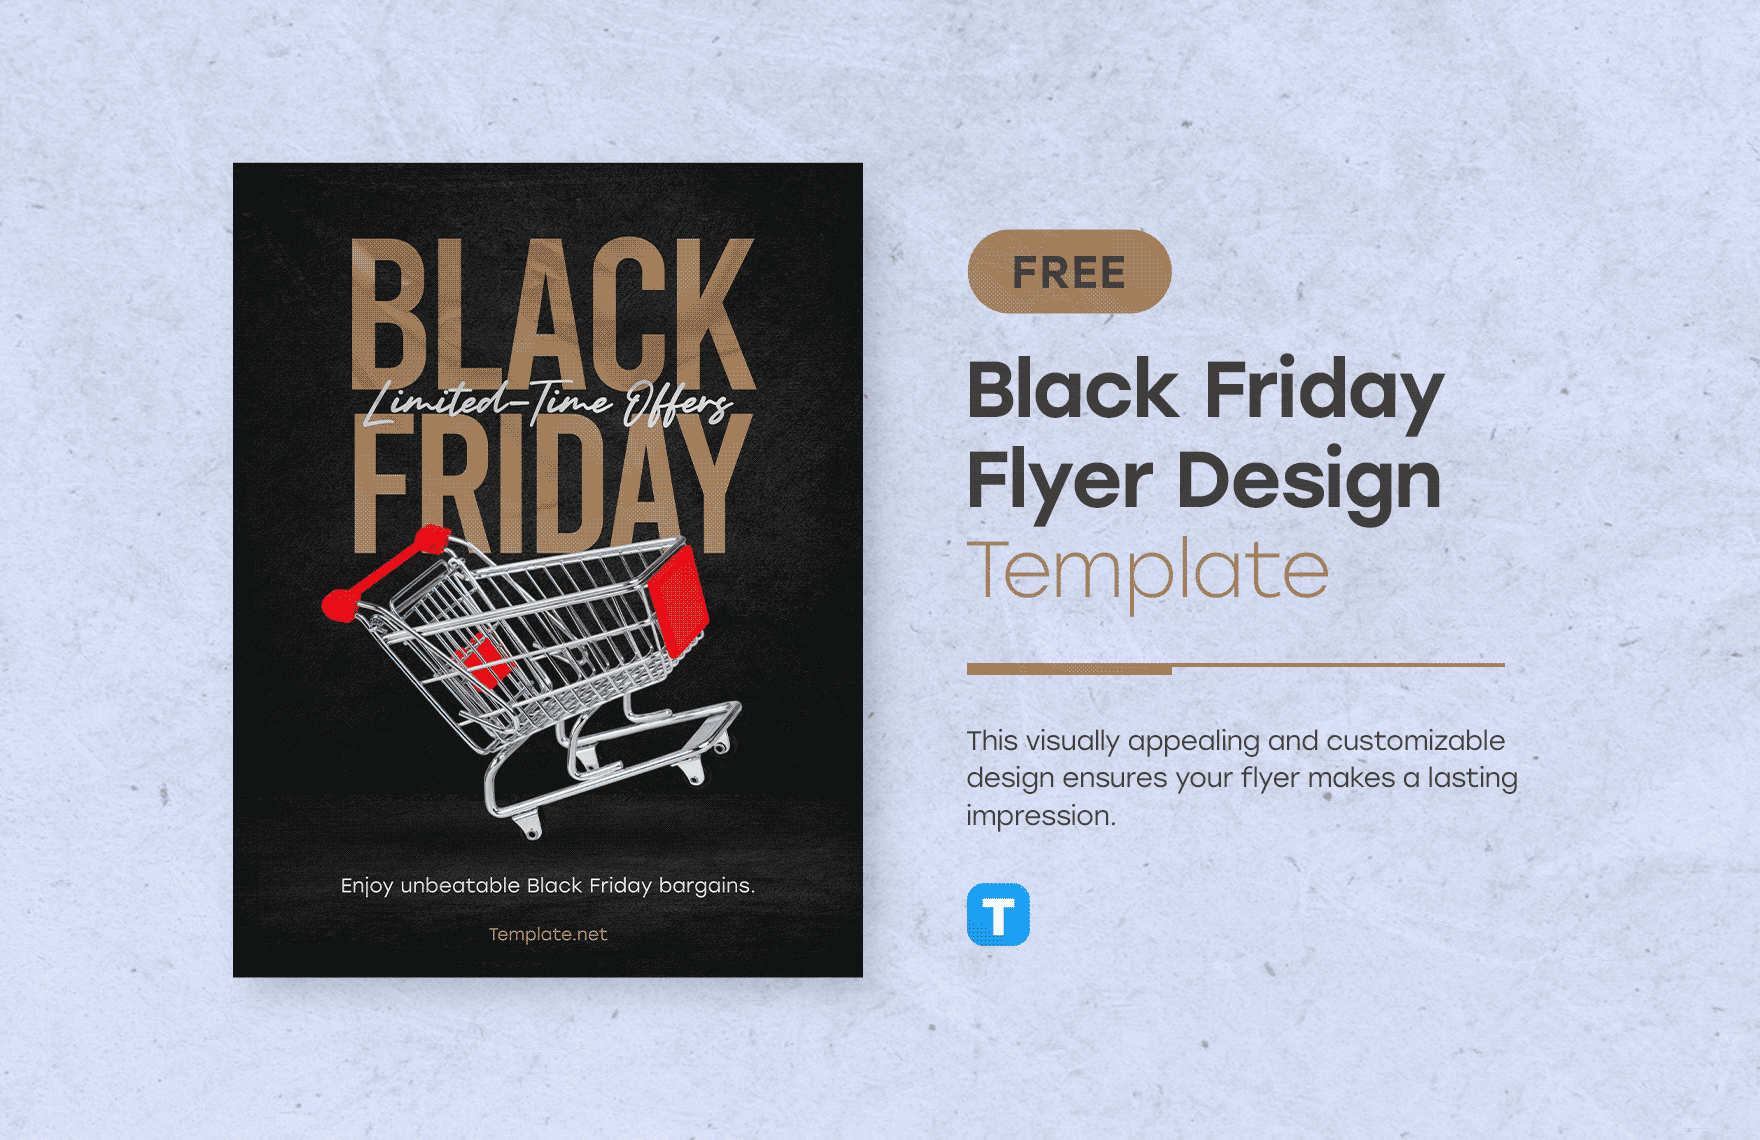 Black Friday Flyer Design Template